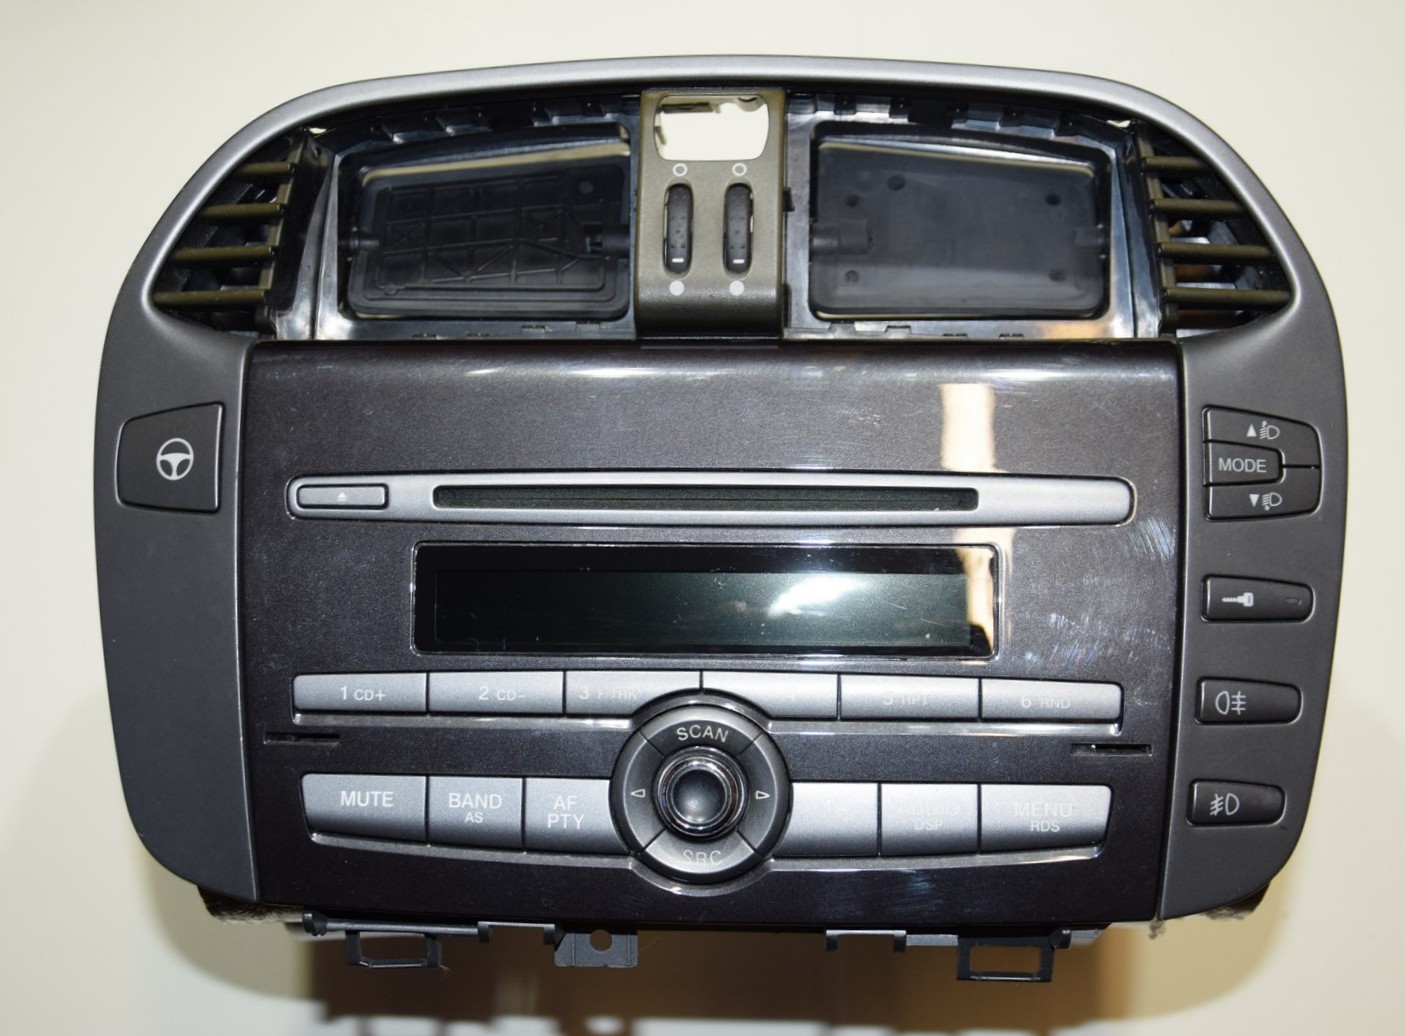 Fiat bravo 2 radio cd mp3 factory radio - Online car parts ❱ XDALYS